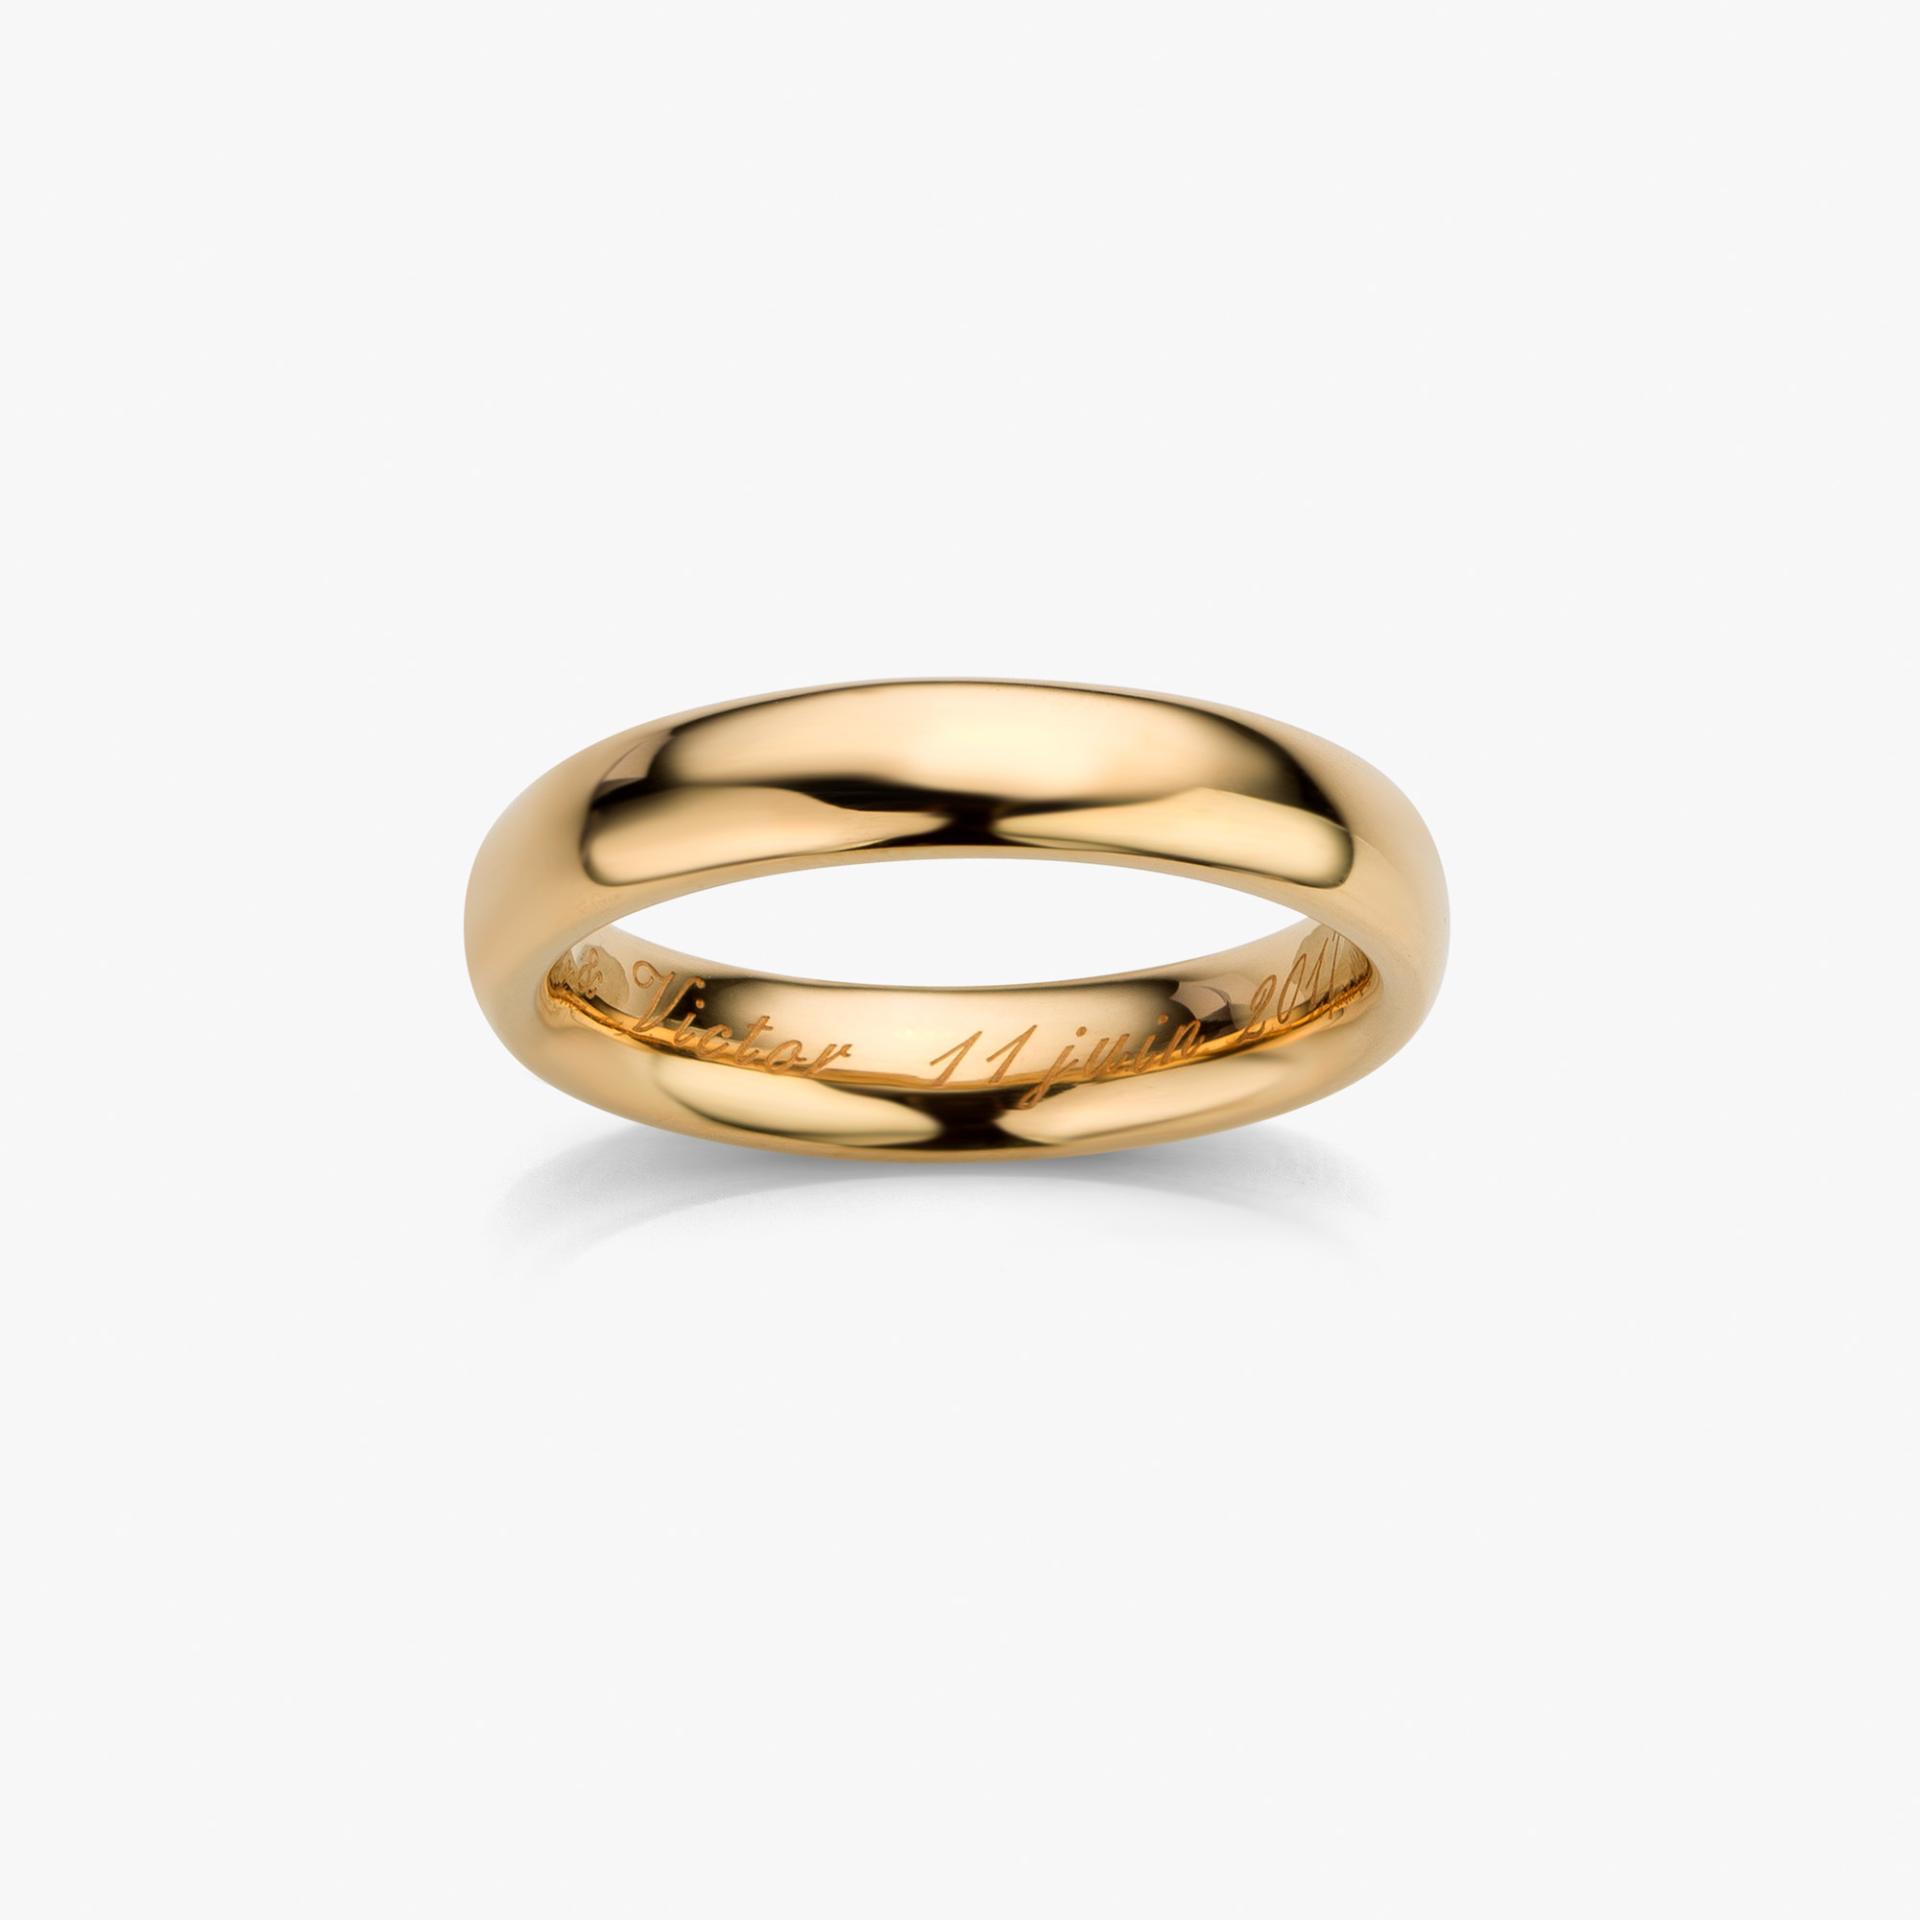 Wedding ring model Harmony made by Maison De Greef